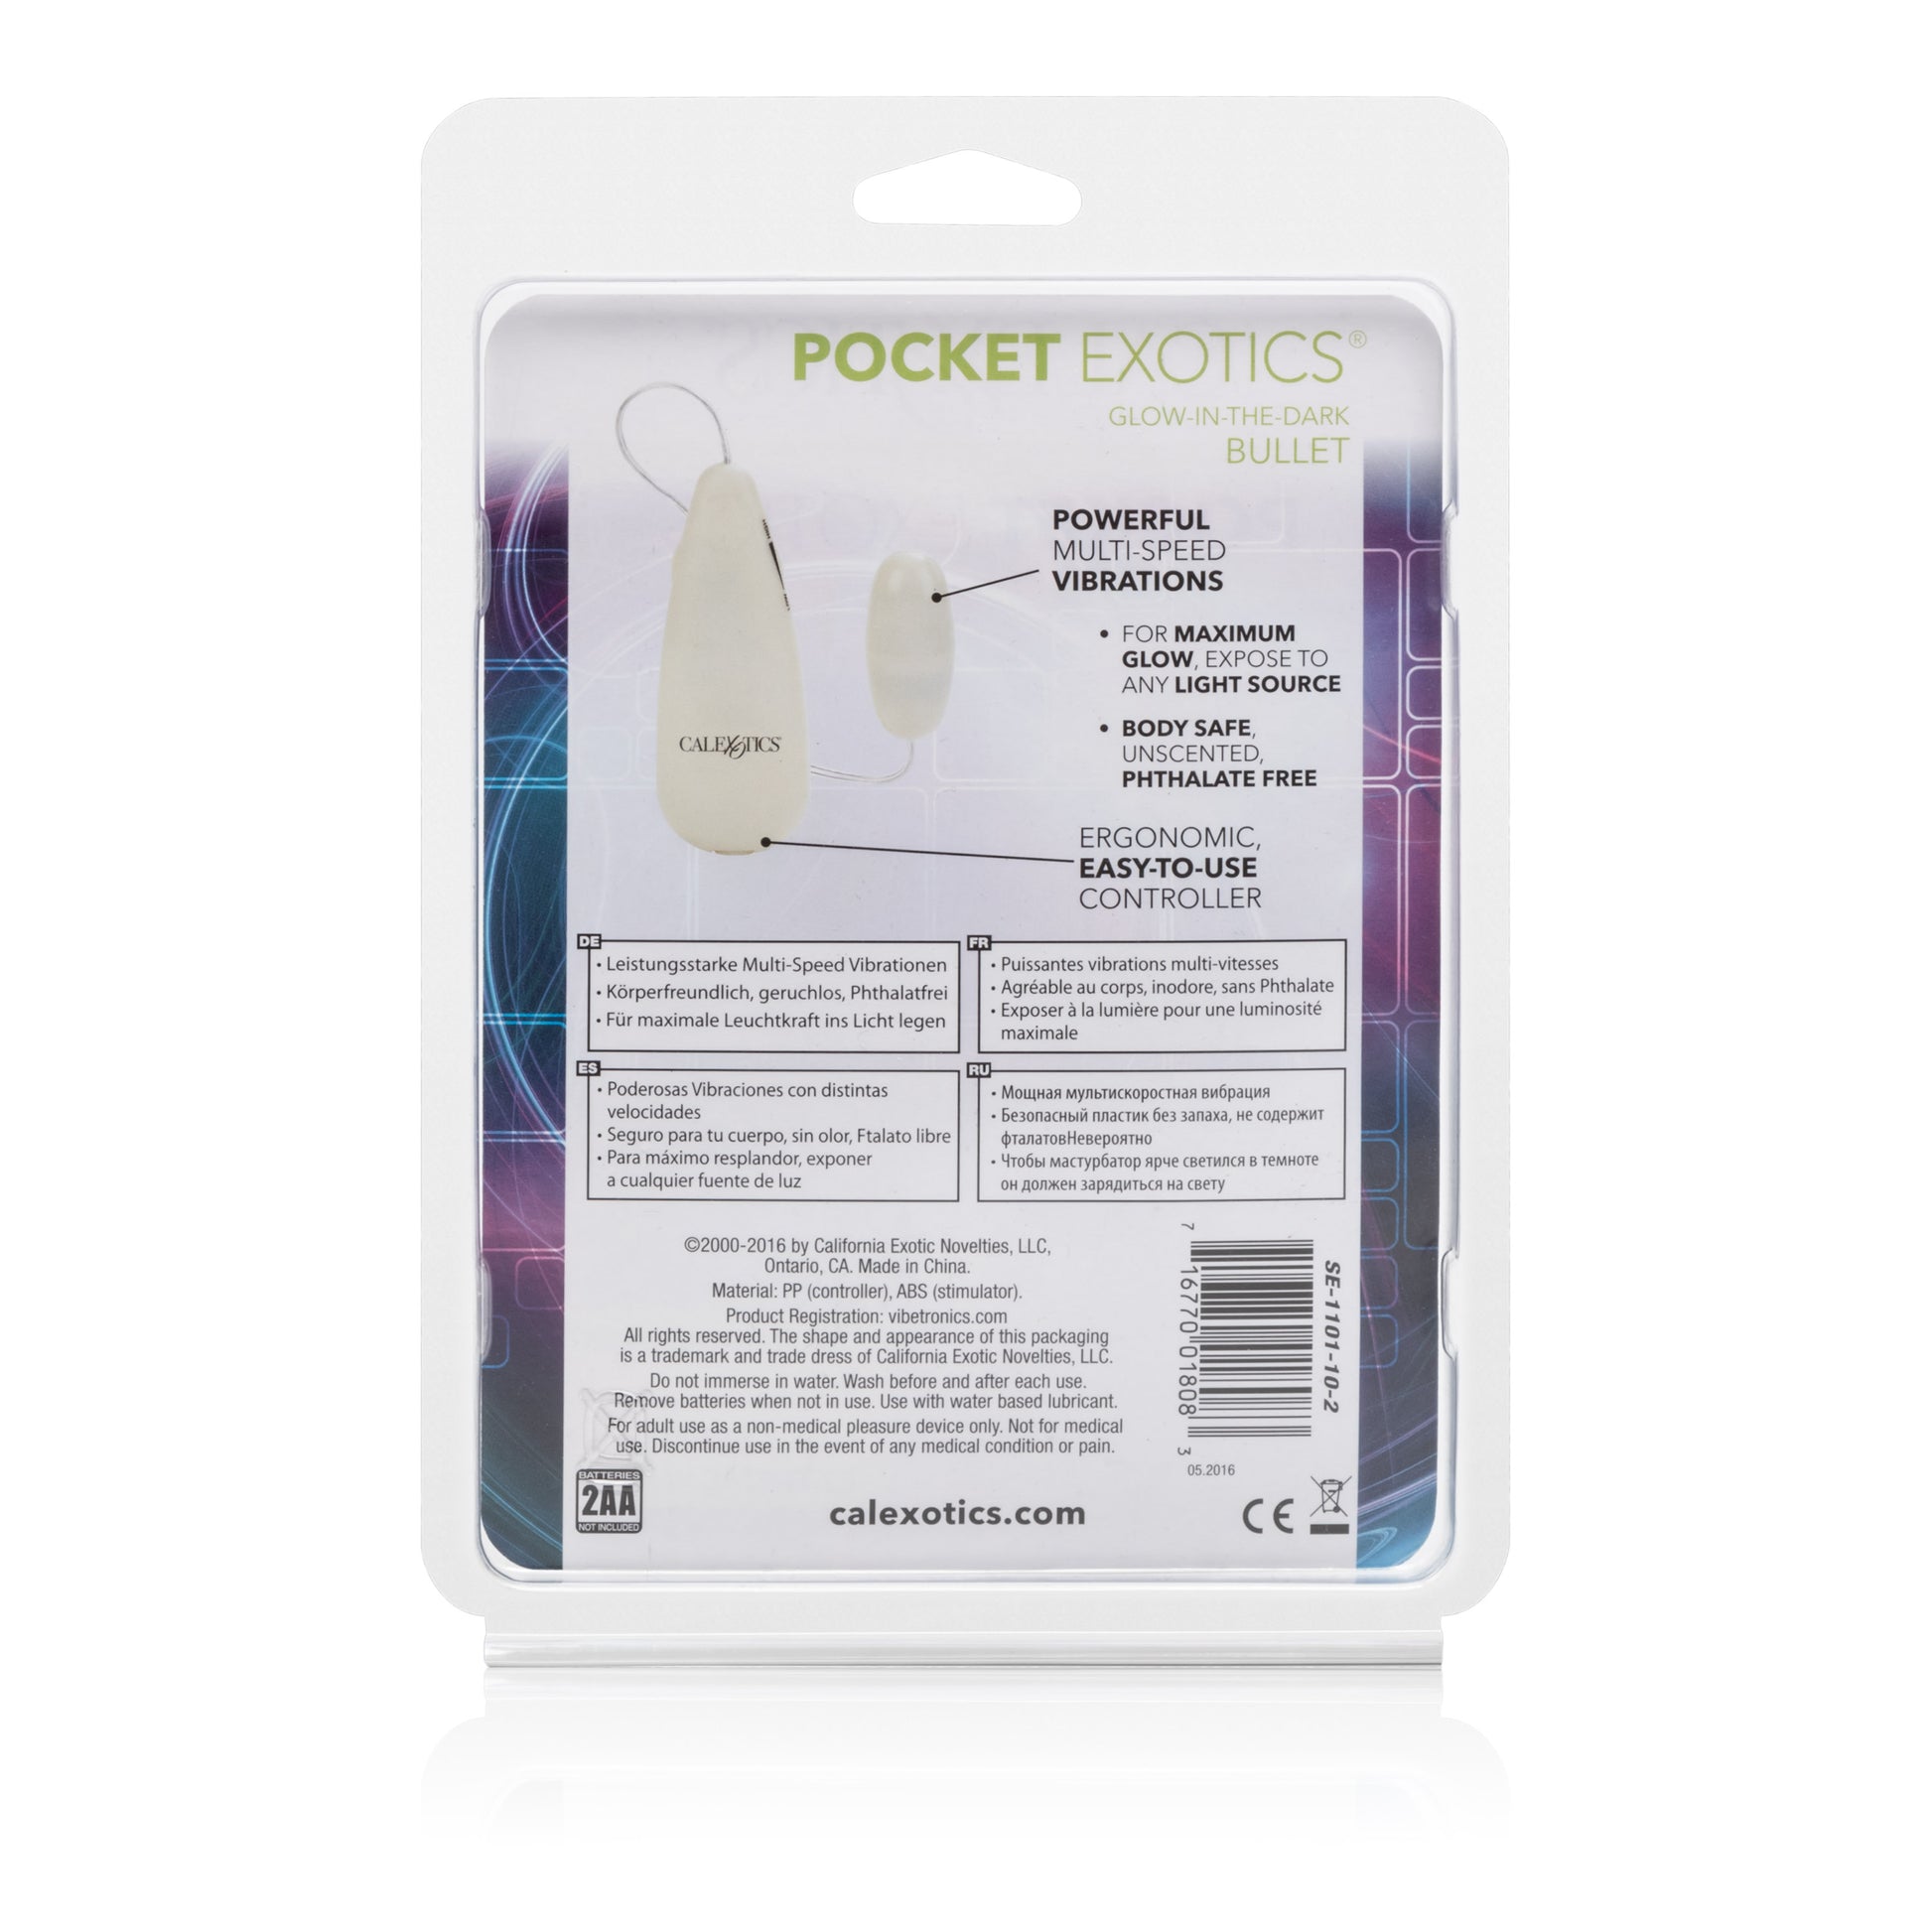 Glow-in-the-Dark Pocket Exotics Vibrating Glowing Bullet SE1101102